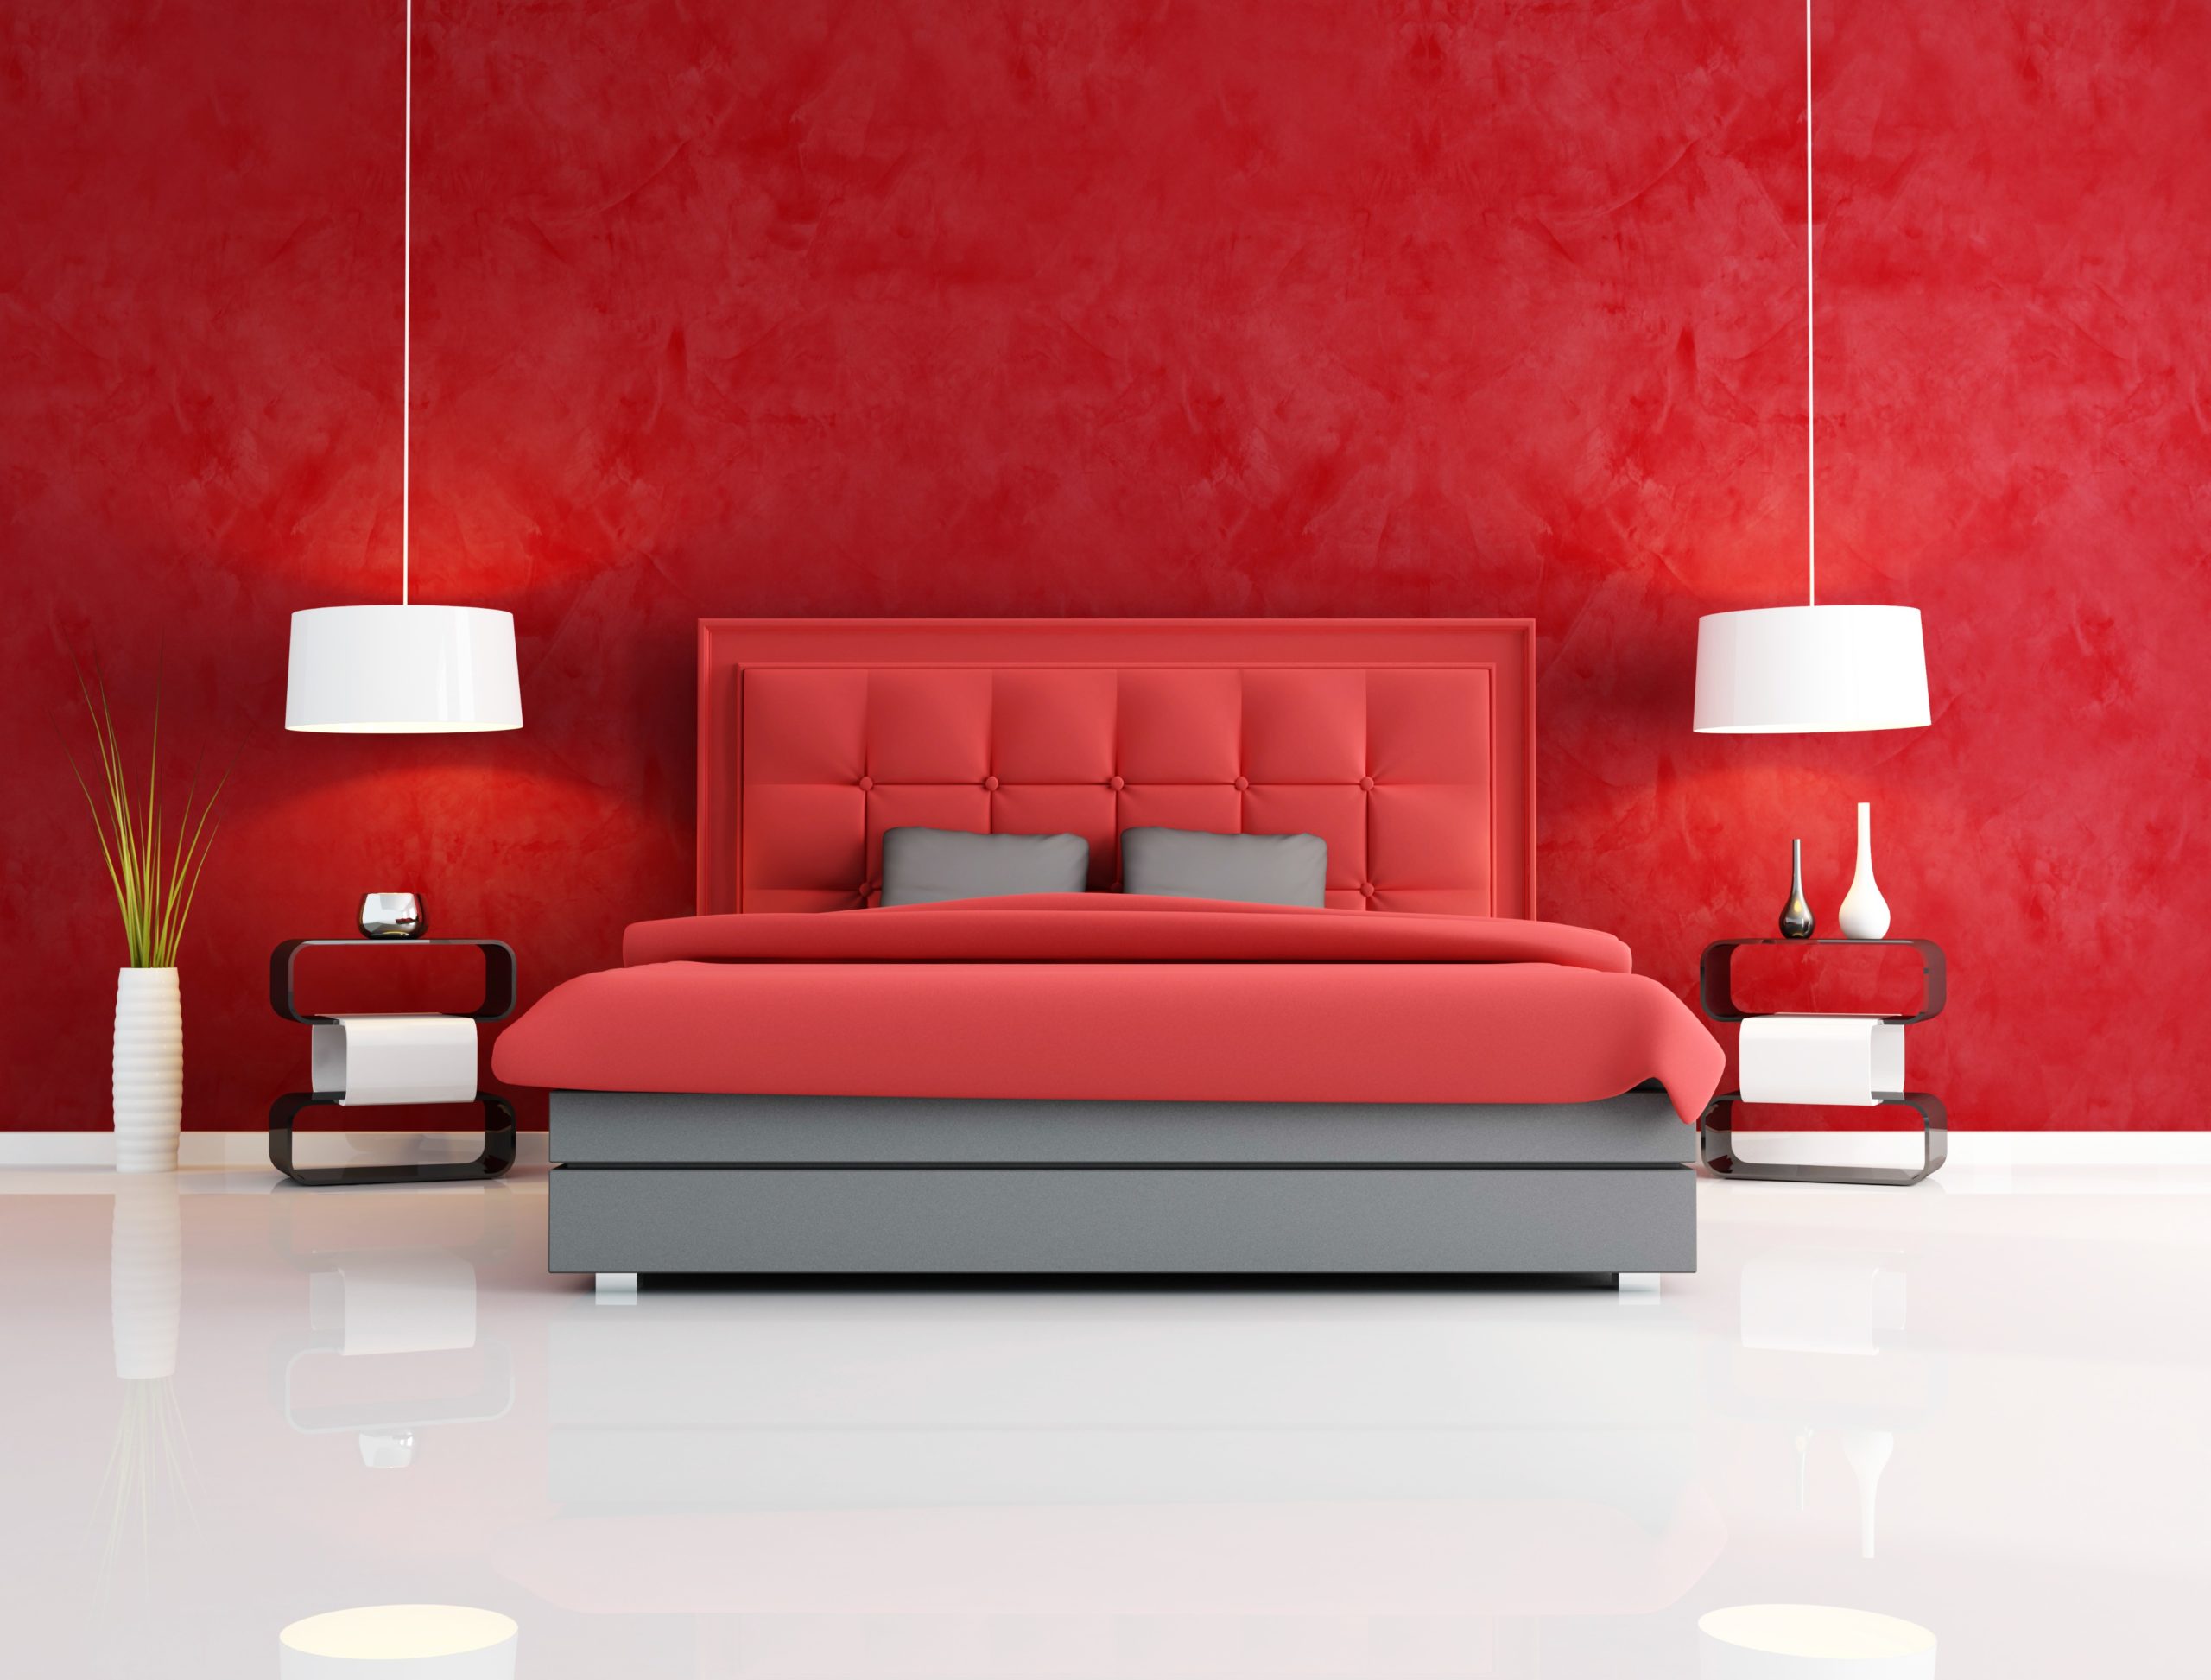 <img src="luxury.jpg" alt="luxury red and grey bed"/> 